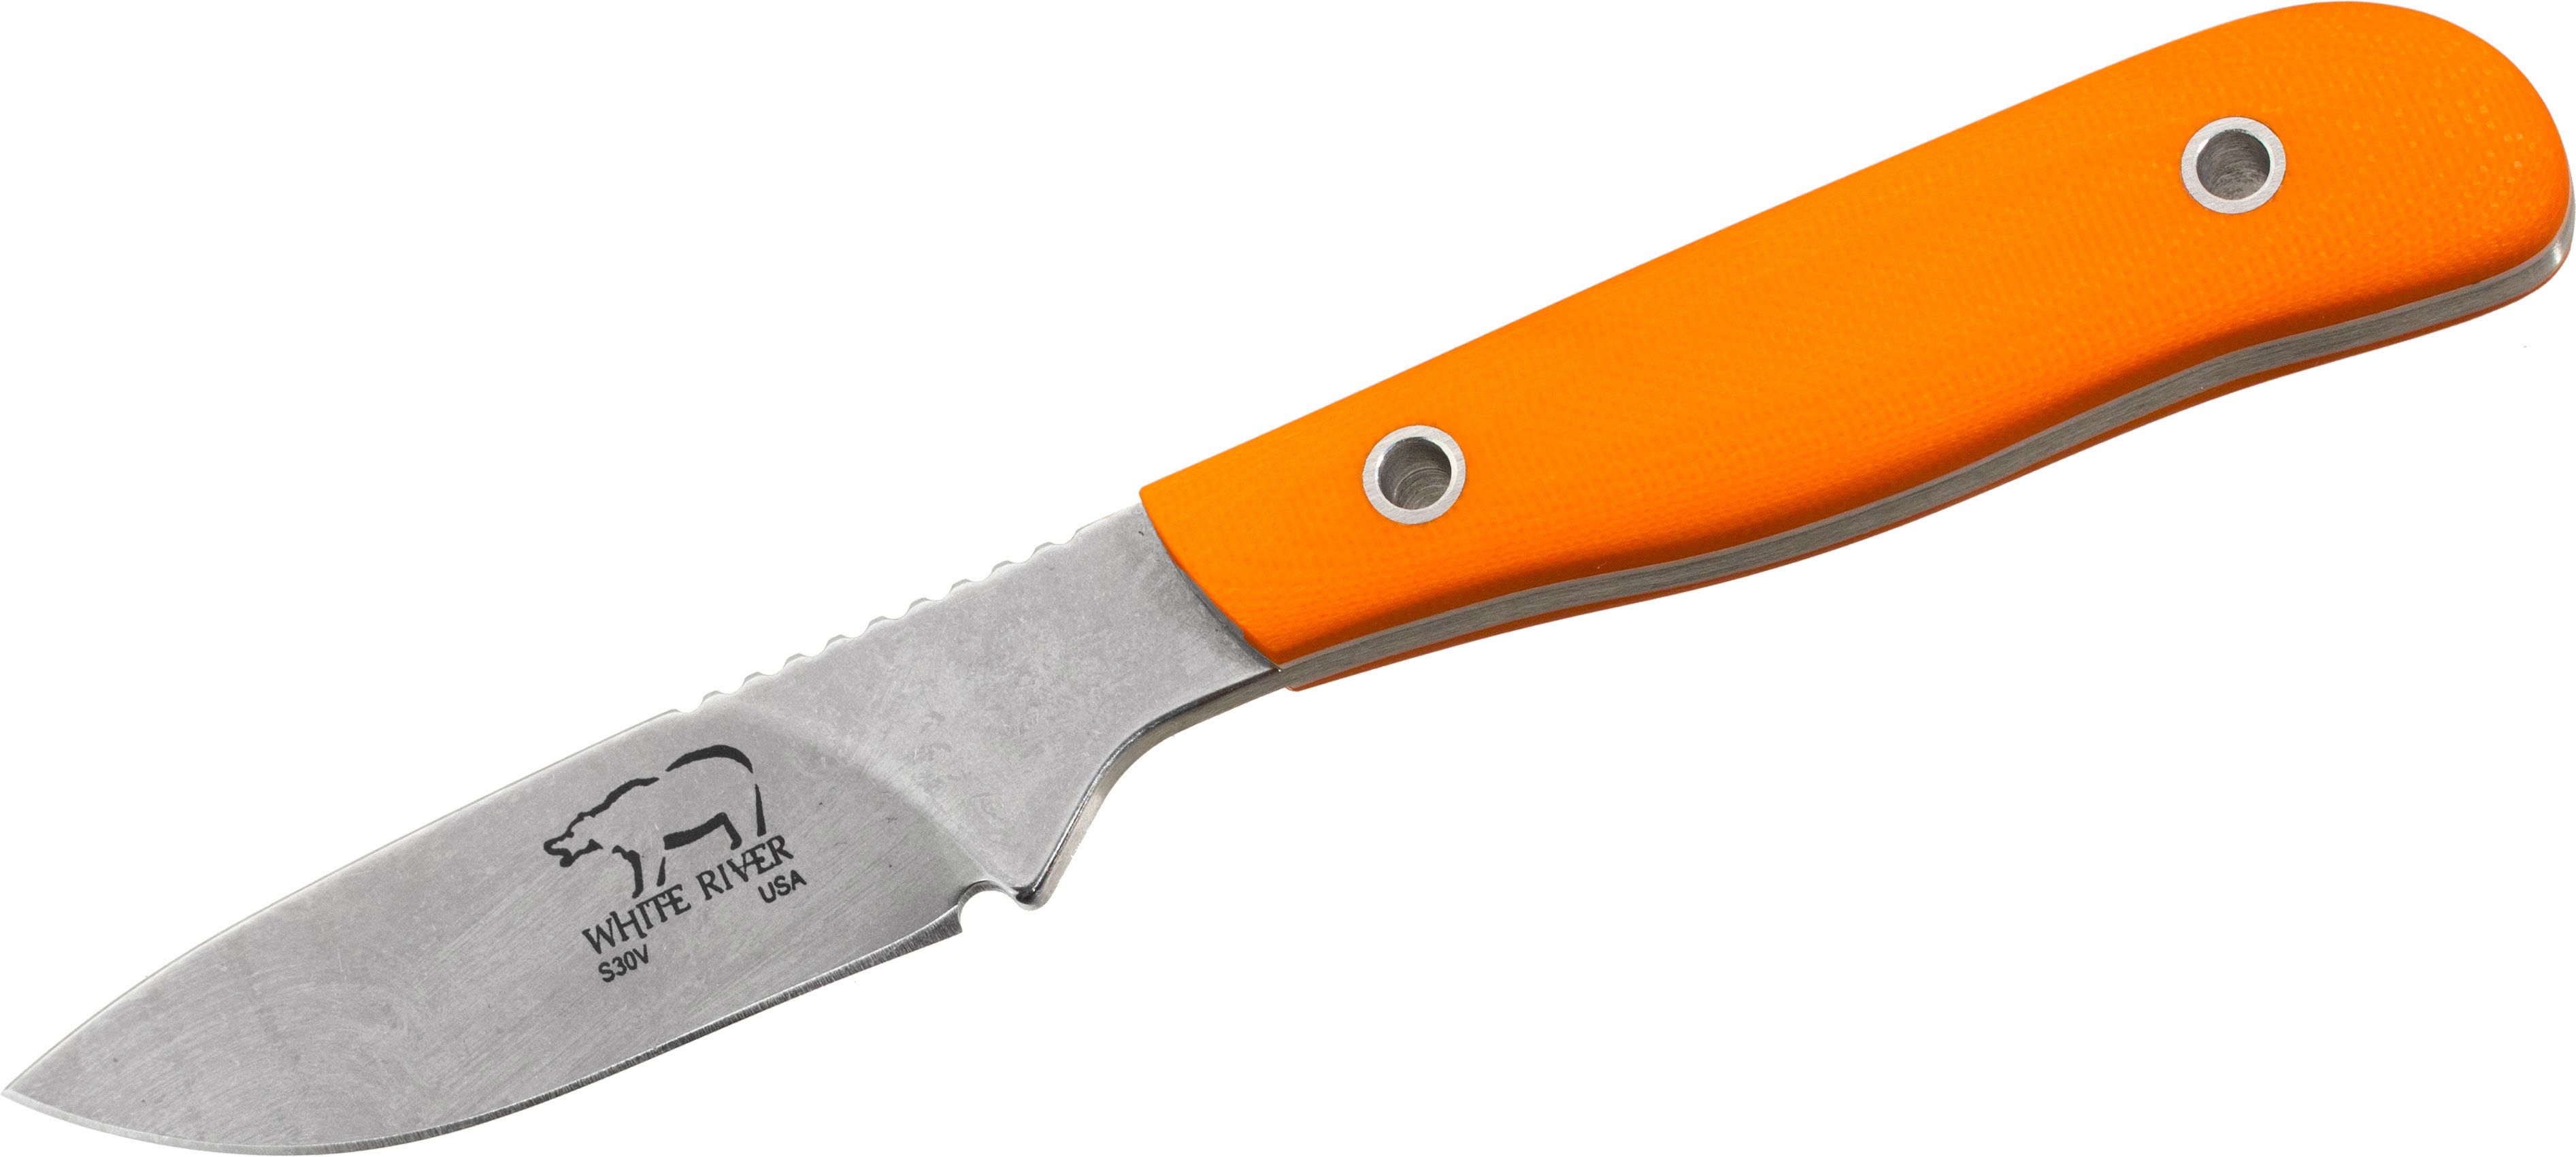 INNOVATIONwhite™ 4.5  Ceramic Utility Knife - White Z212 Blade with  Non-Slip White Handle